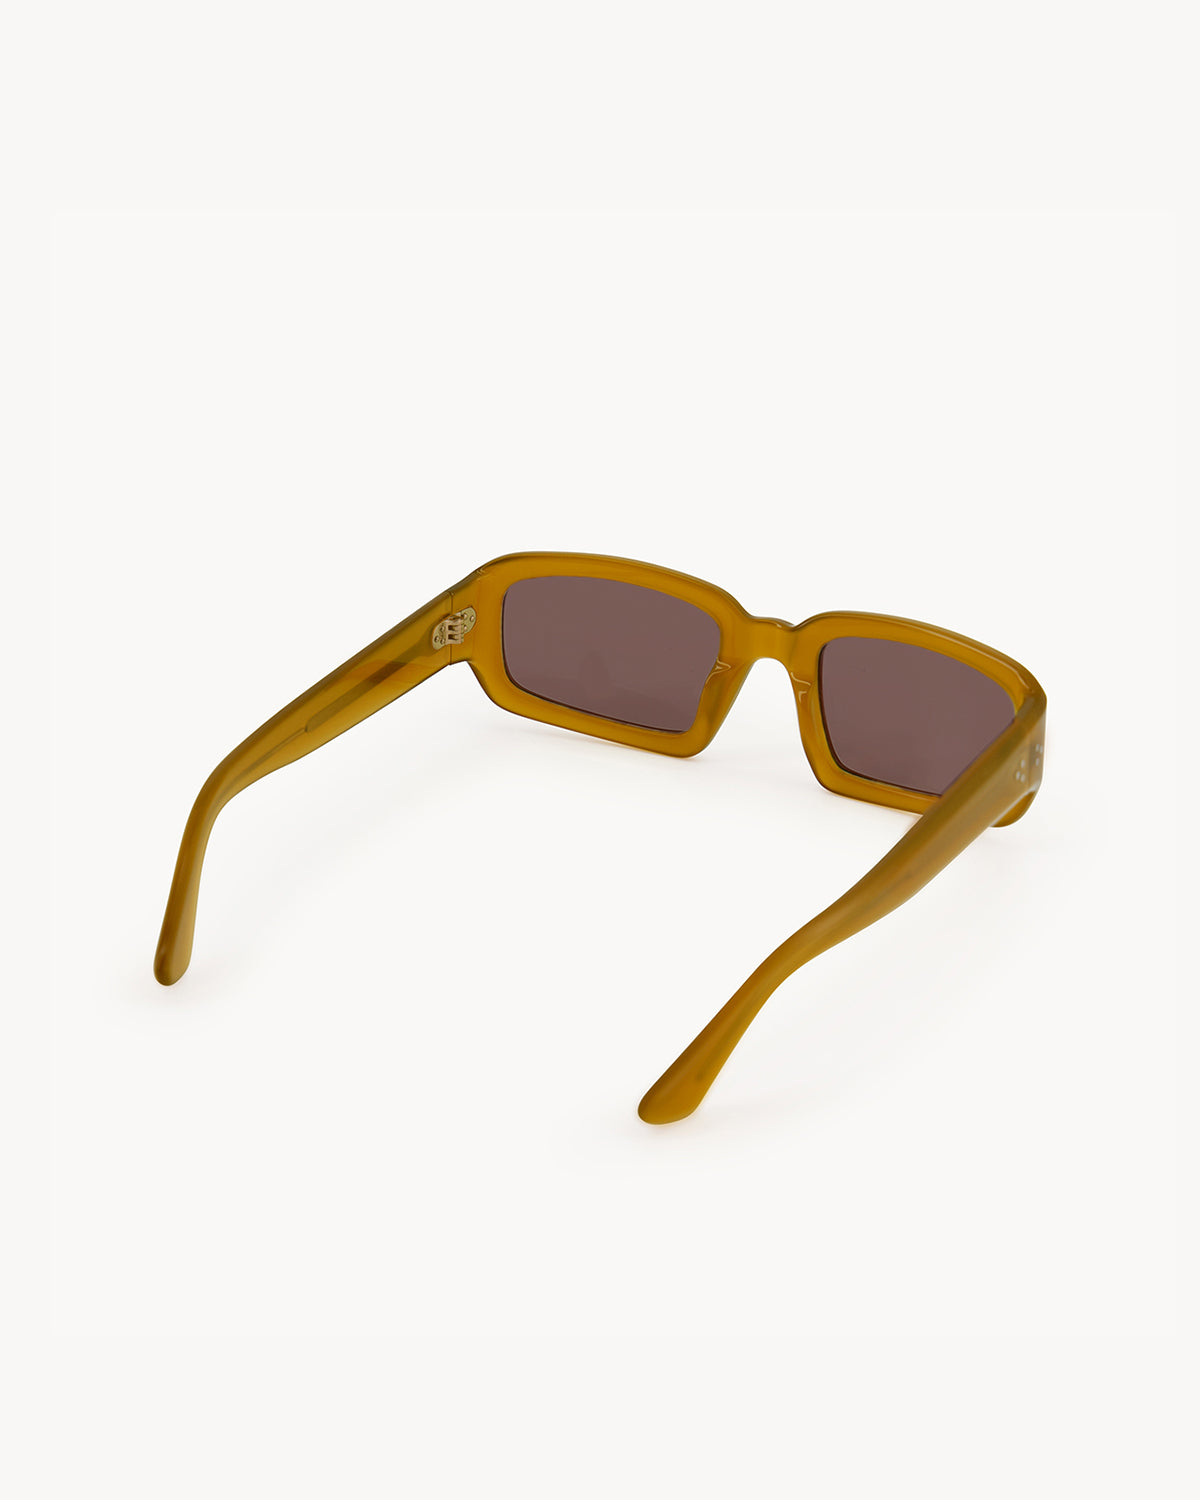 Port Tanger Mektoub Sunglasses in Yellow Ochra Acetate and Tobacco Lenses 3